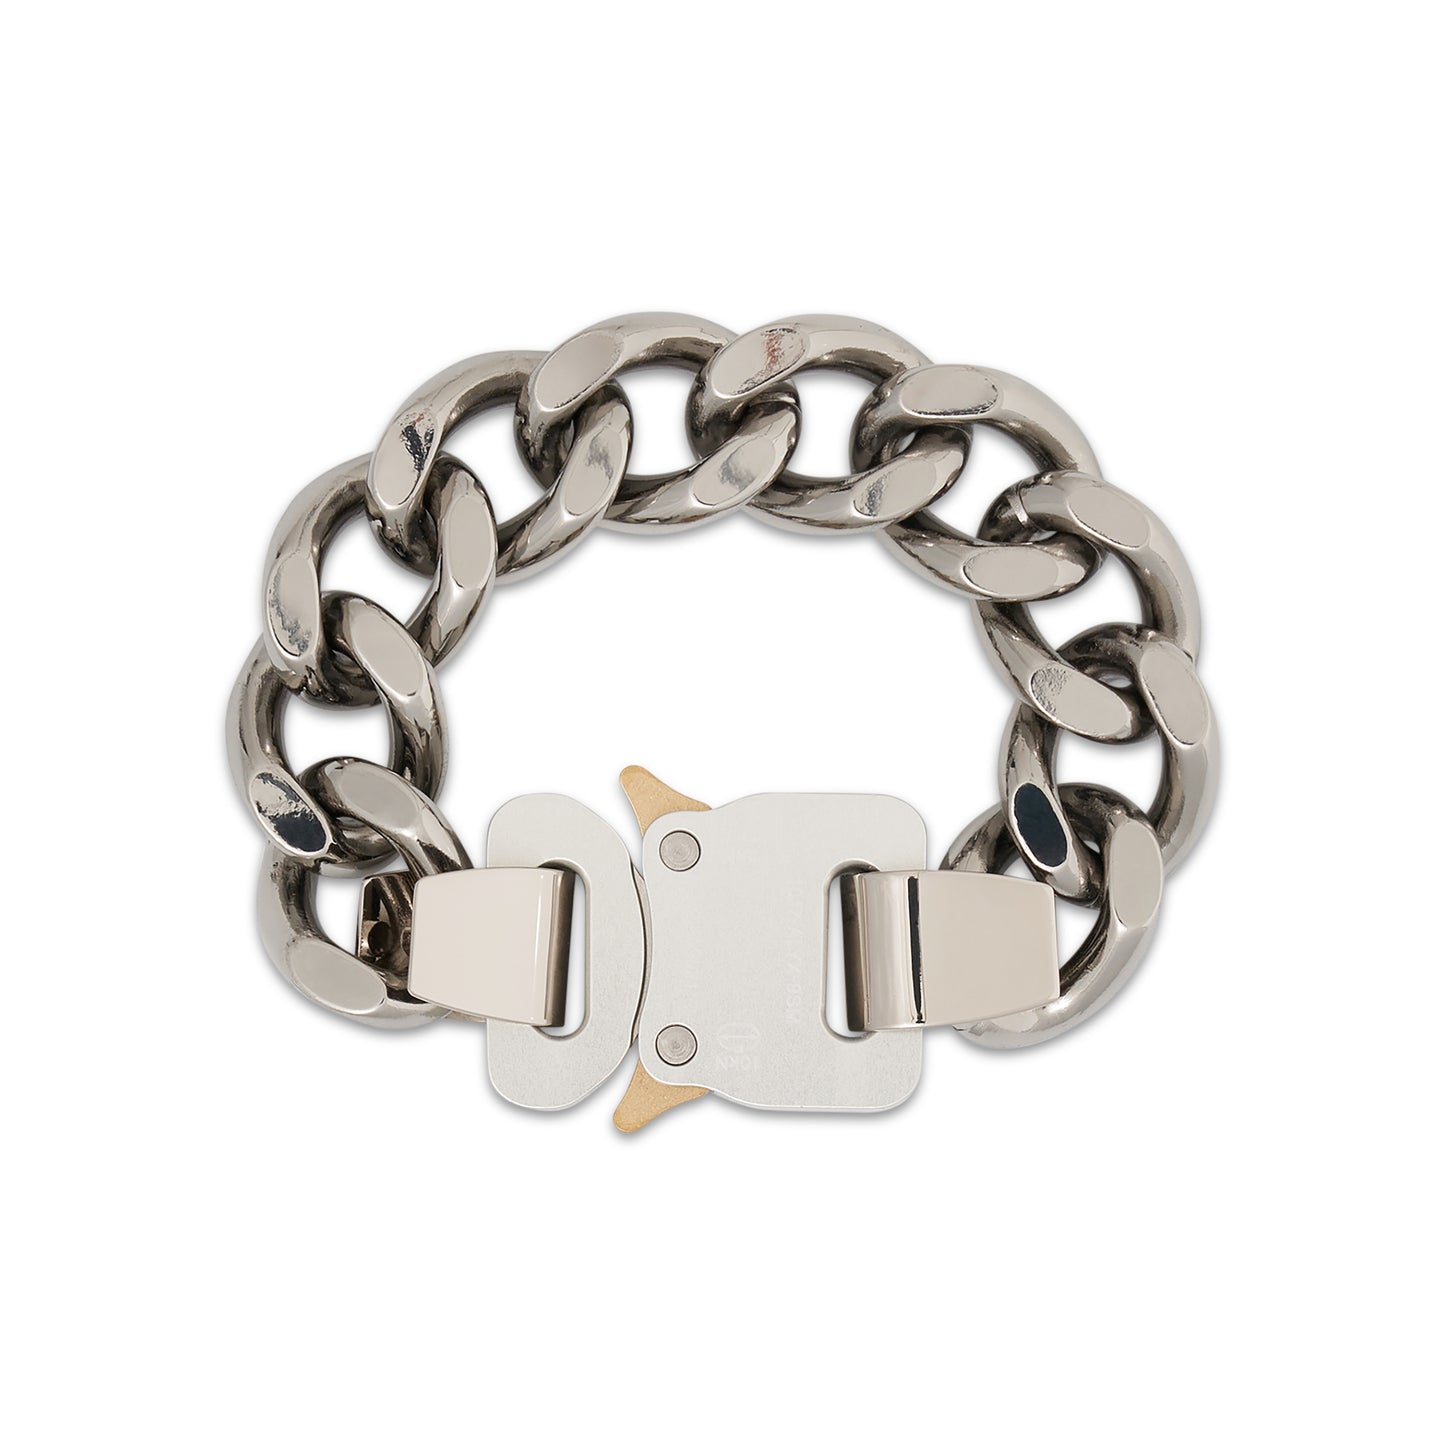 Bracelet with Buckle in Silver